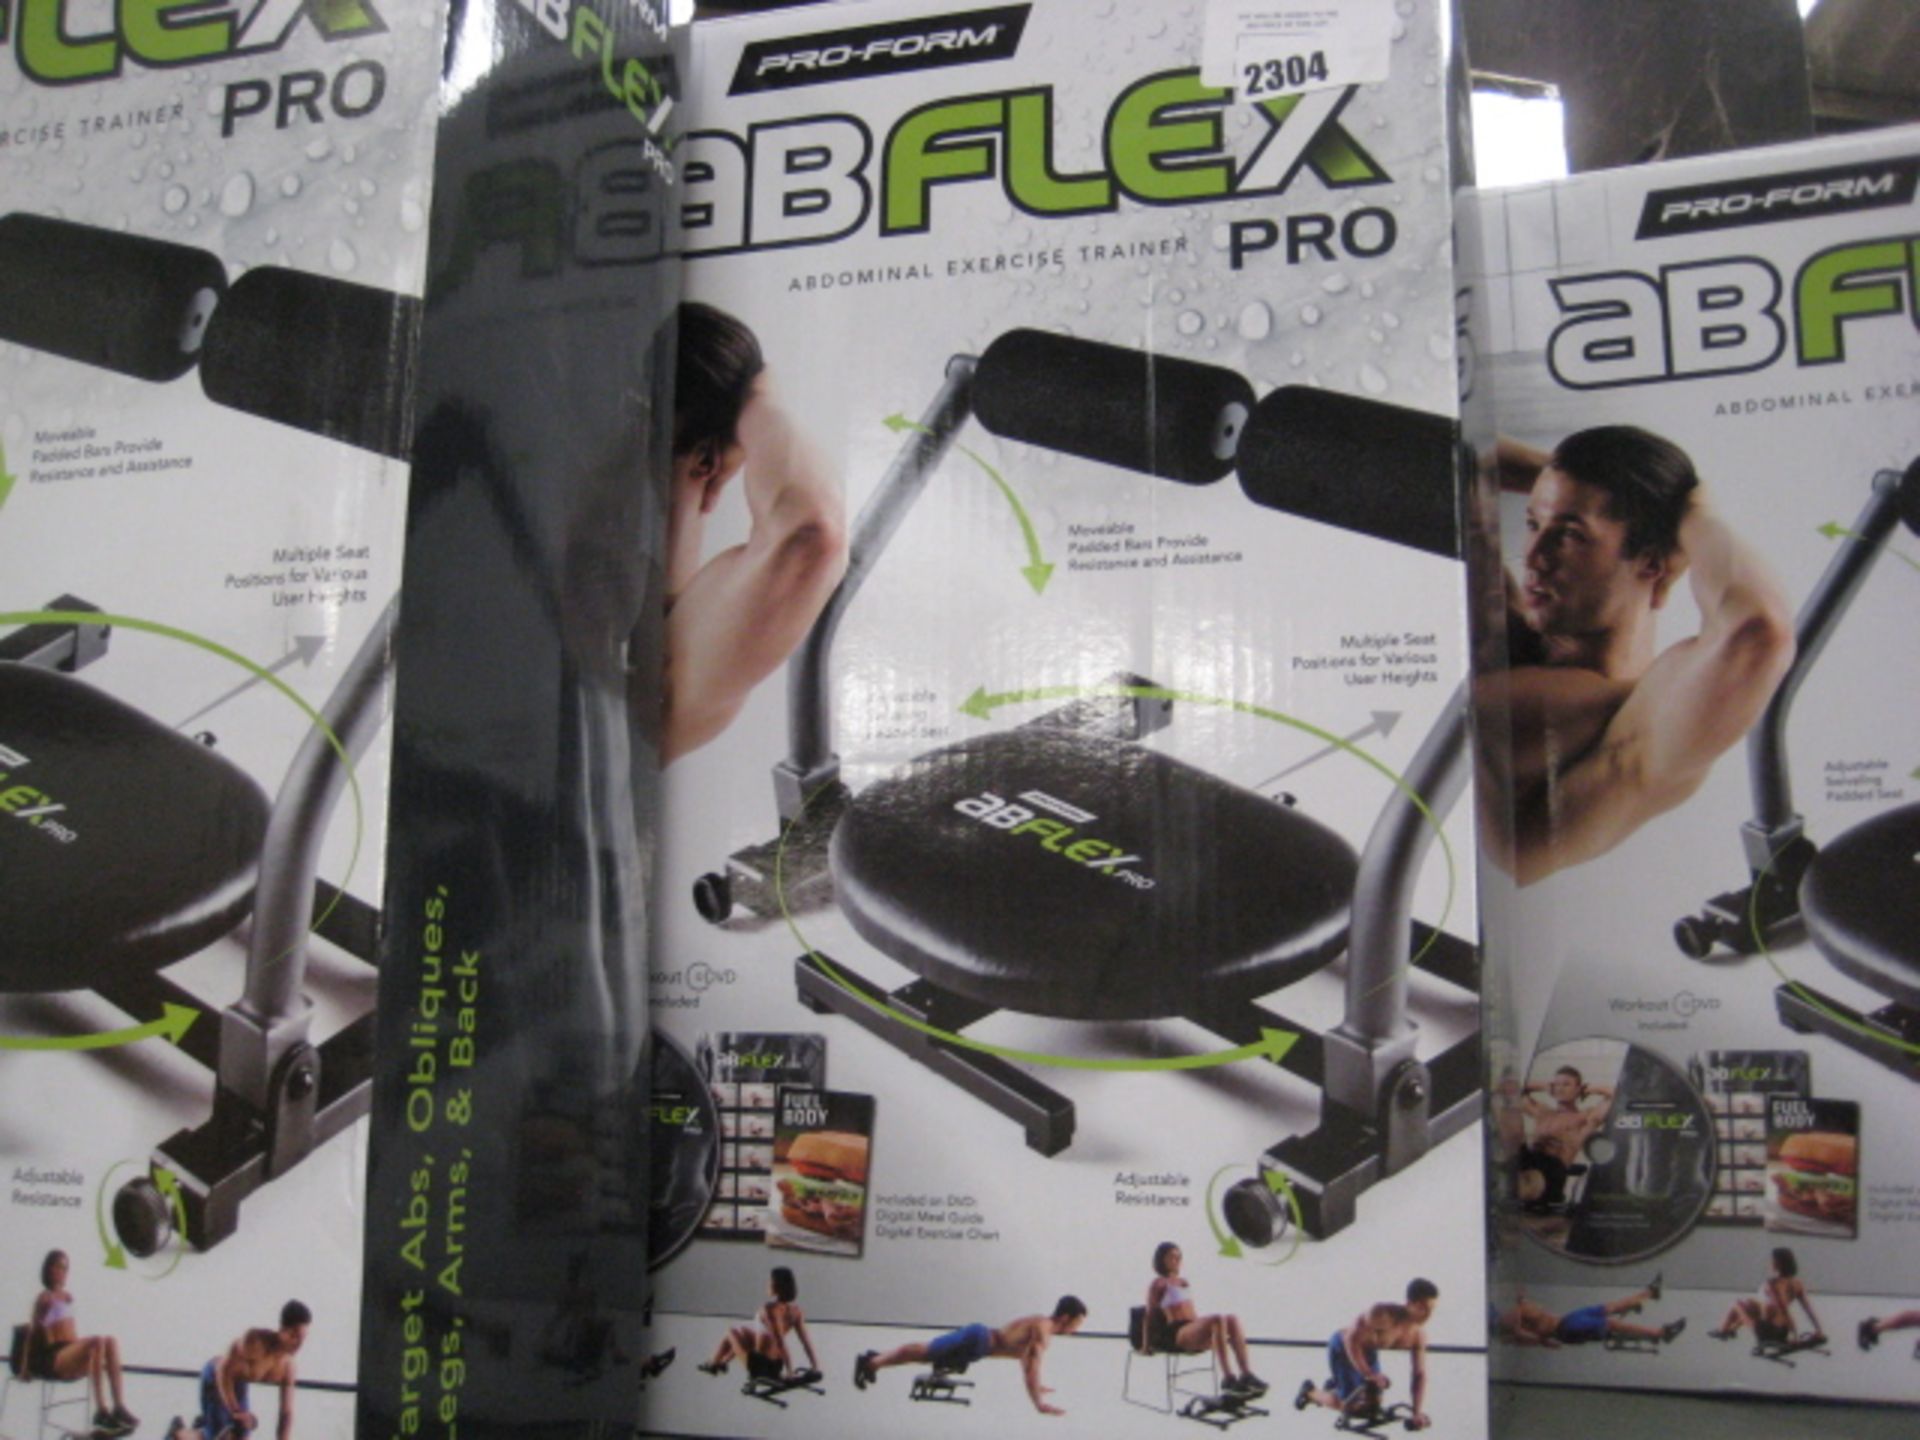 Boxed Pro Form Ab Flex exercise trainer